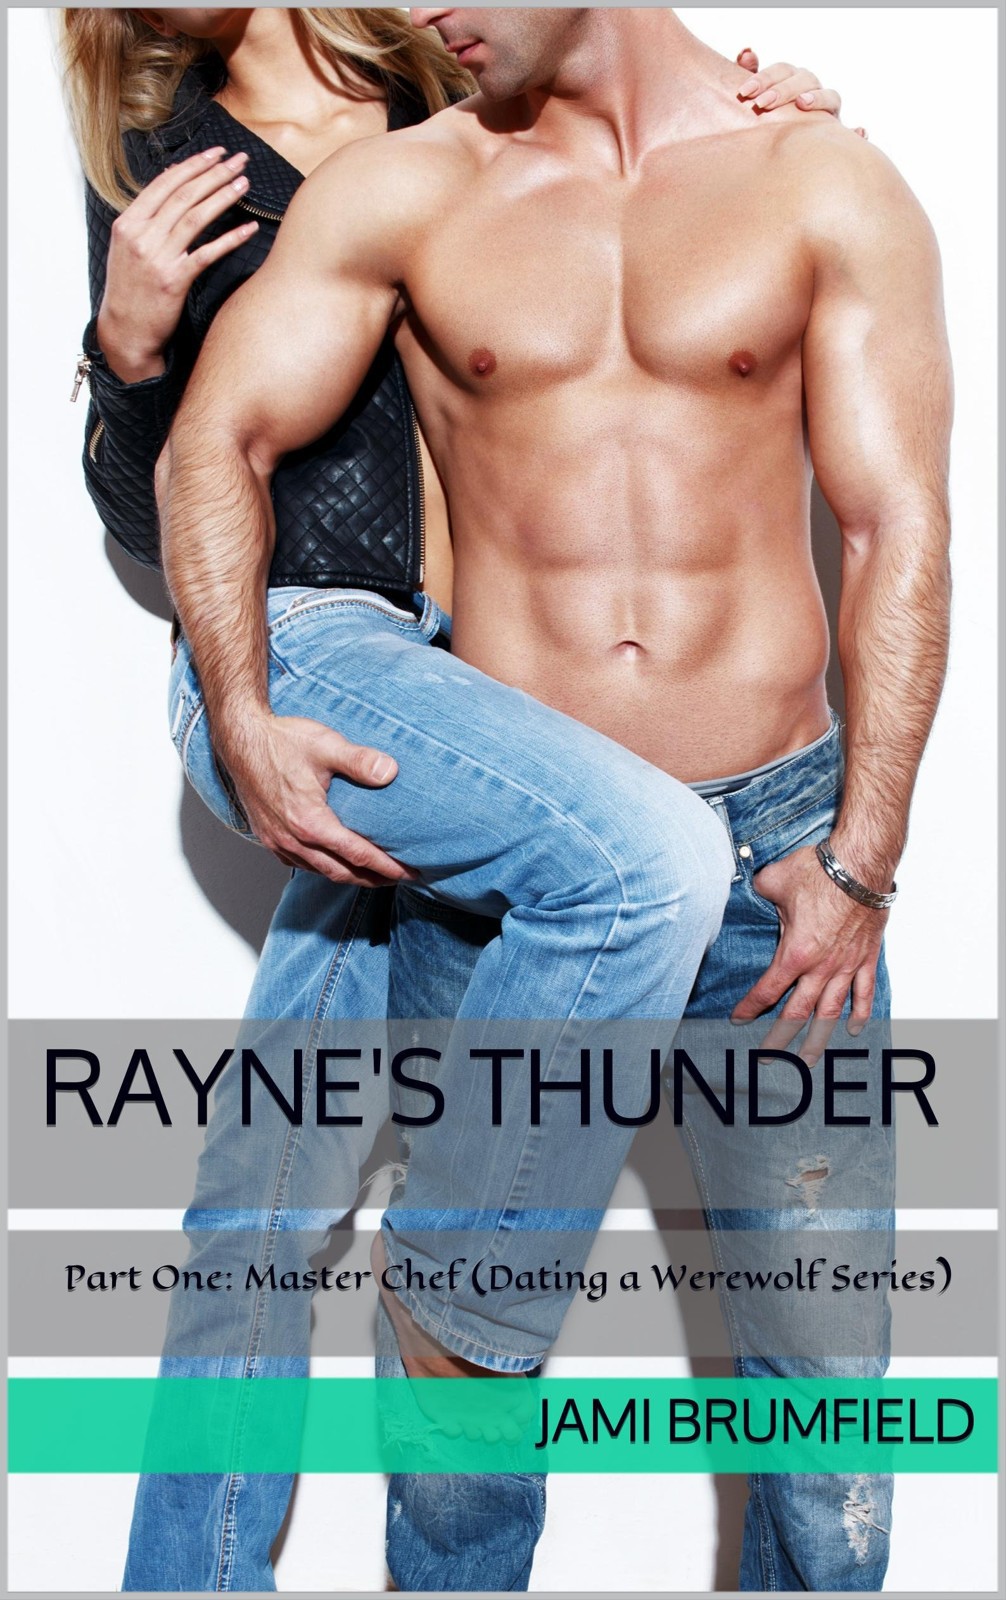 Rayne’s Thunder Part One: Master Chef by Jami Brumfield